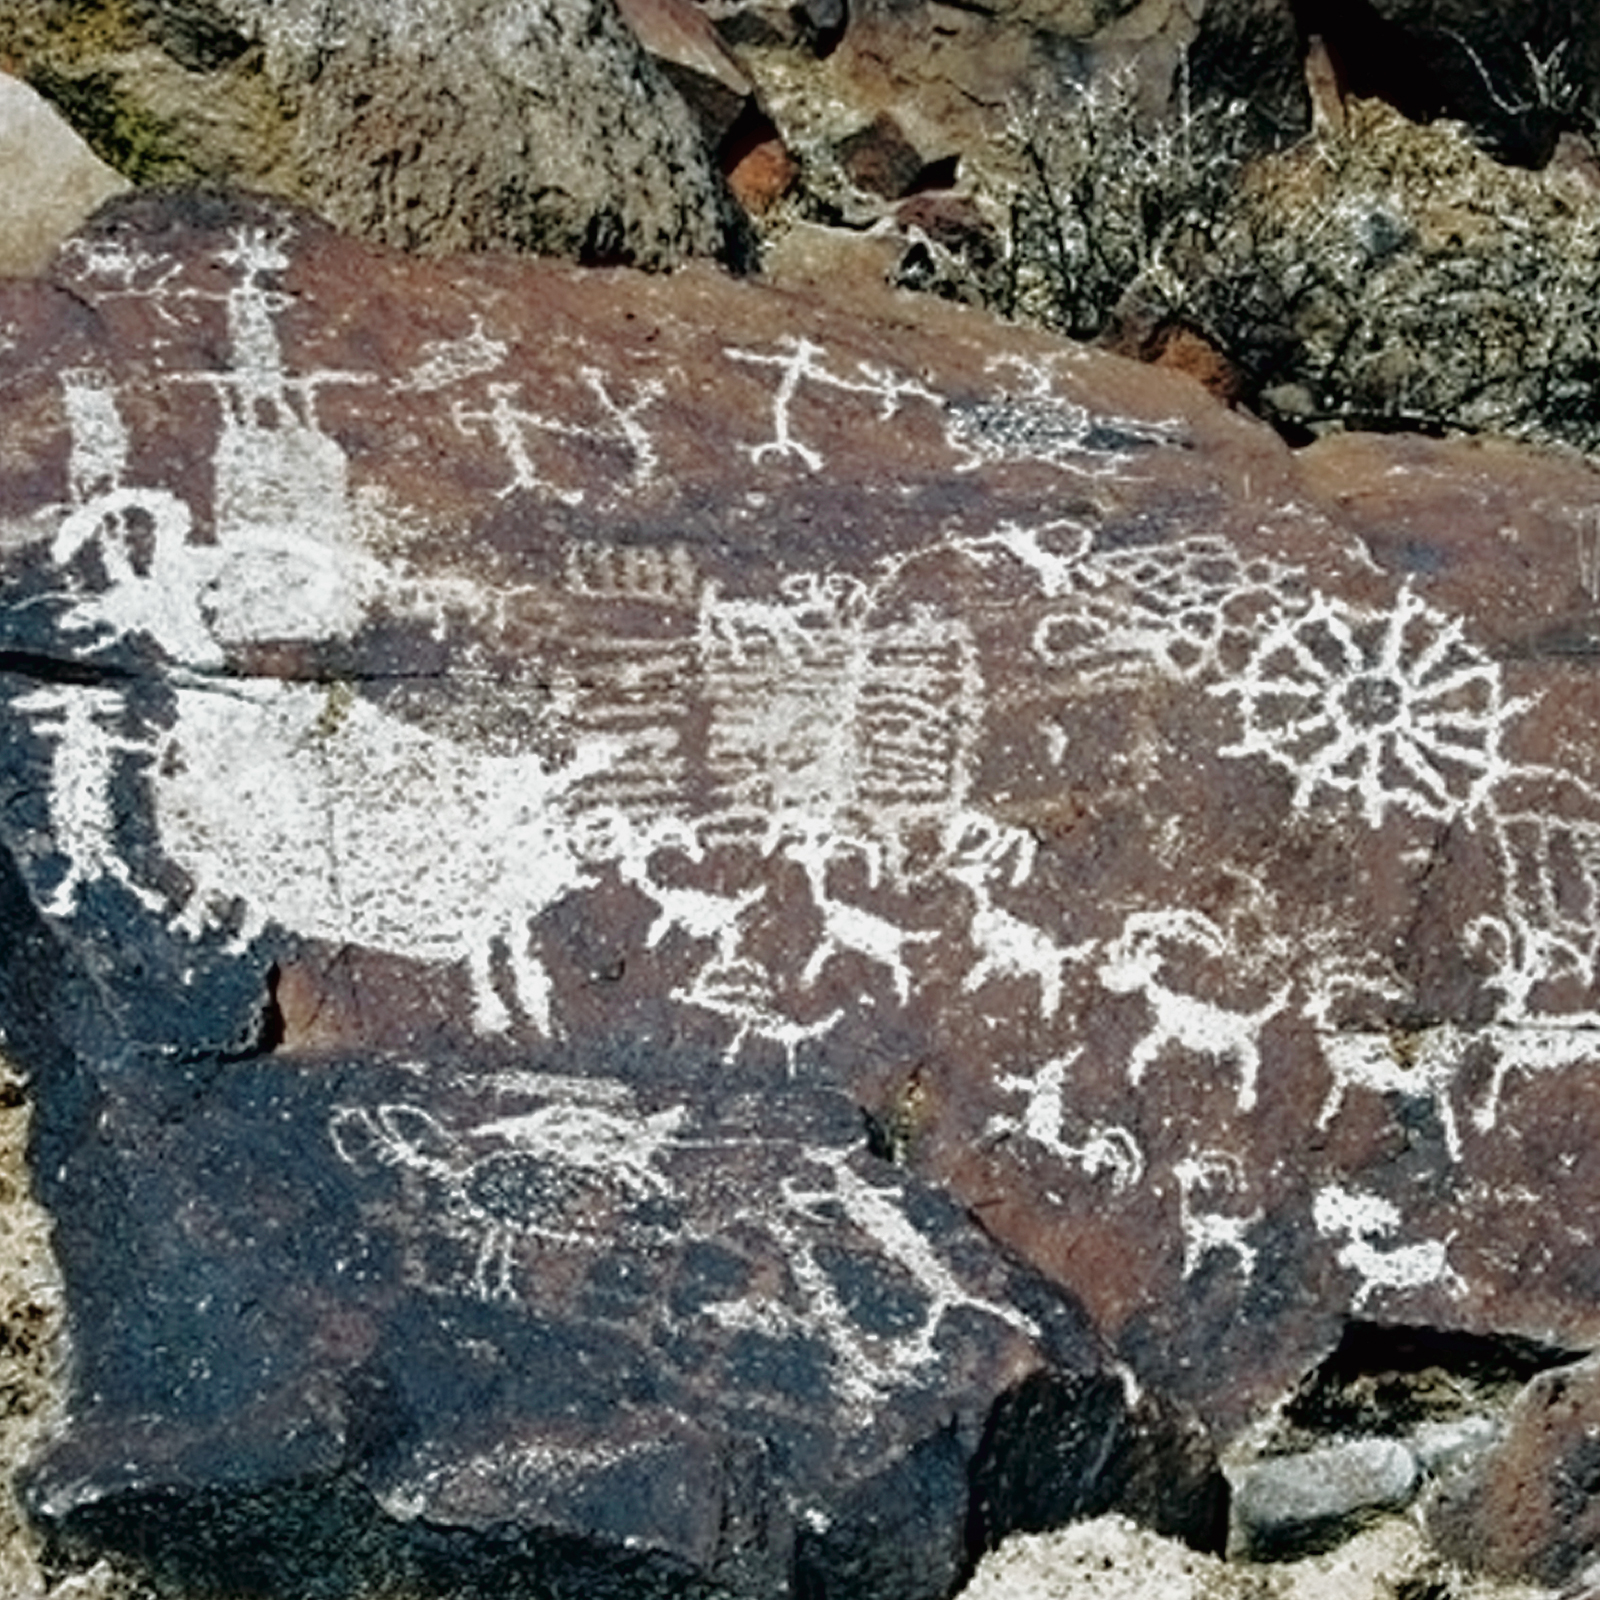 Rock Art Engravings Coso Range Petroglyphs Pictographs Bradshaw Foundation Archaeology Sheep Bighorn Cult California USA America United States Rockart